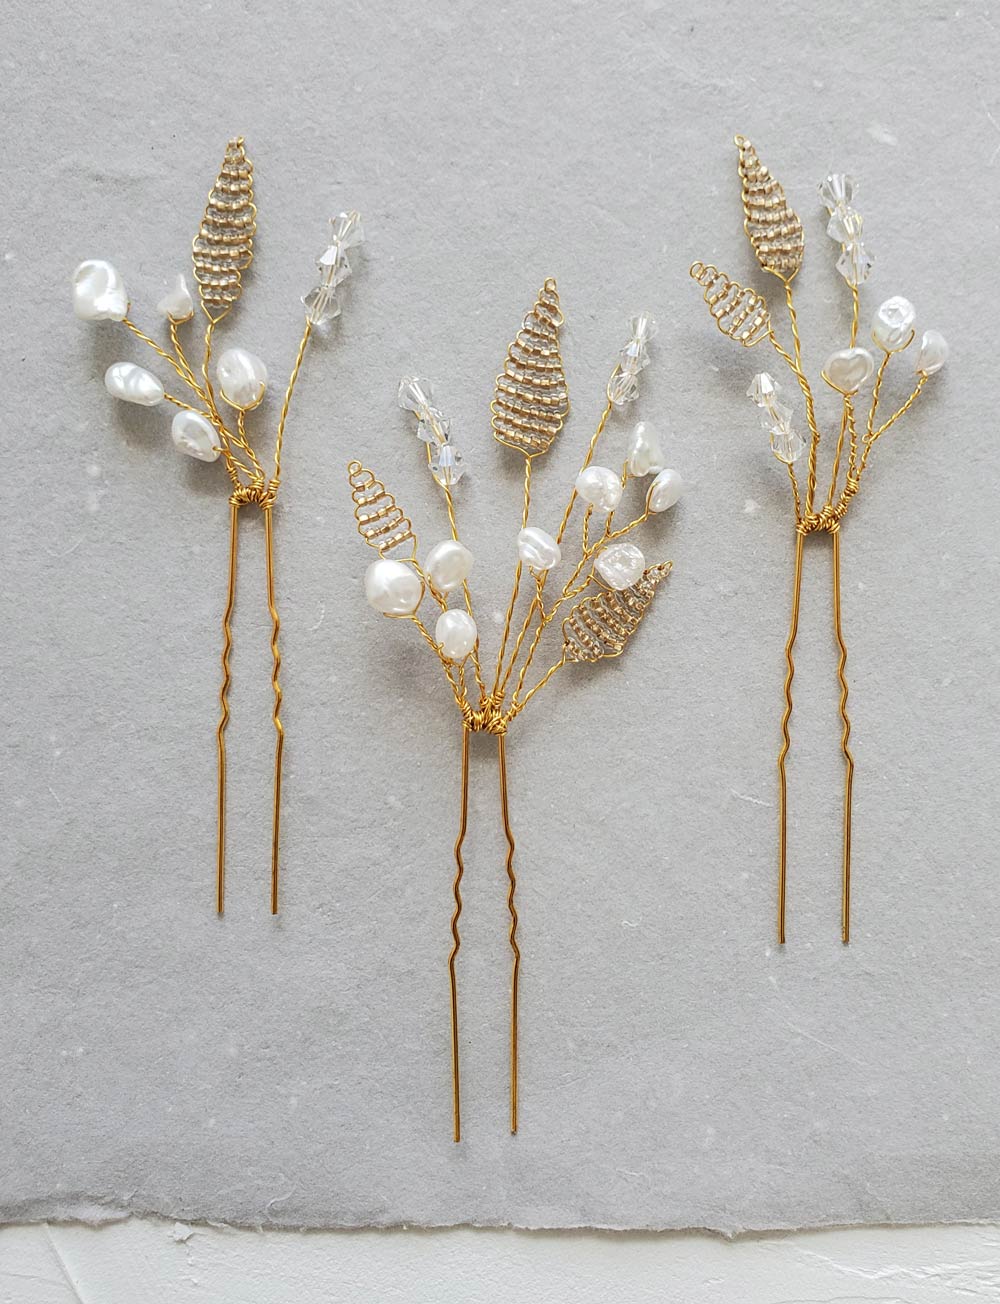 Peach pearl floral hair comb for bride handmade by Carrie Whelan Designs